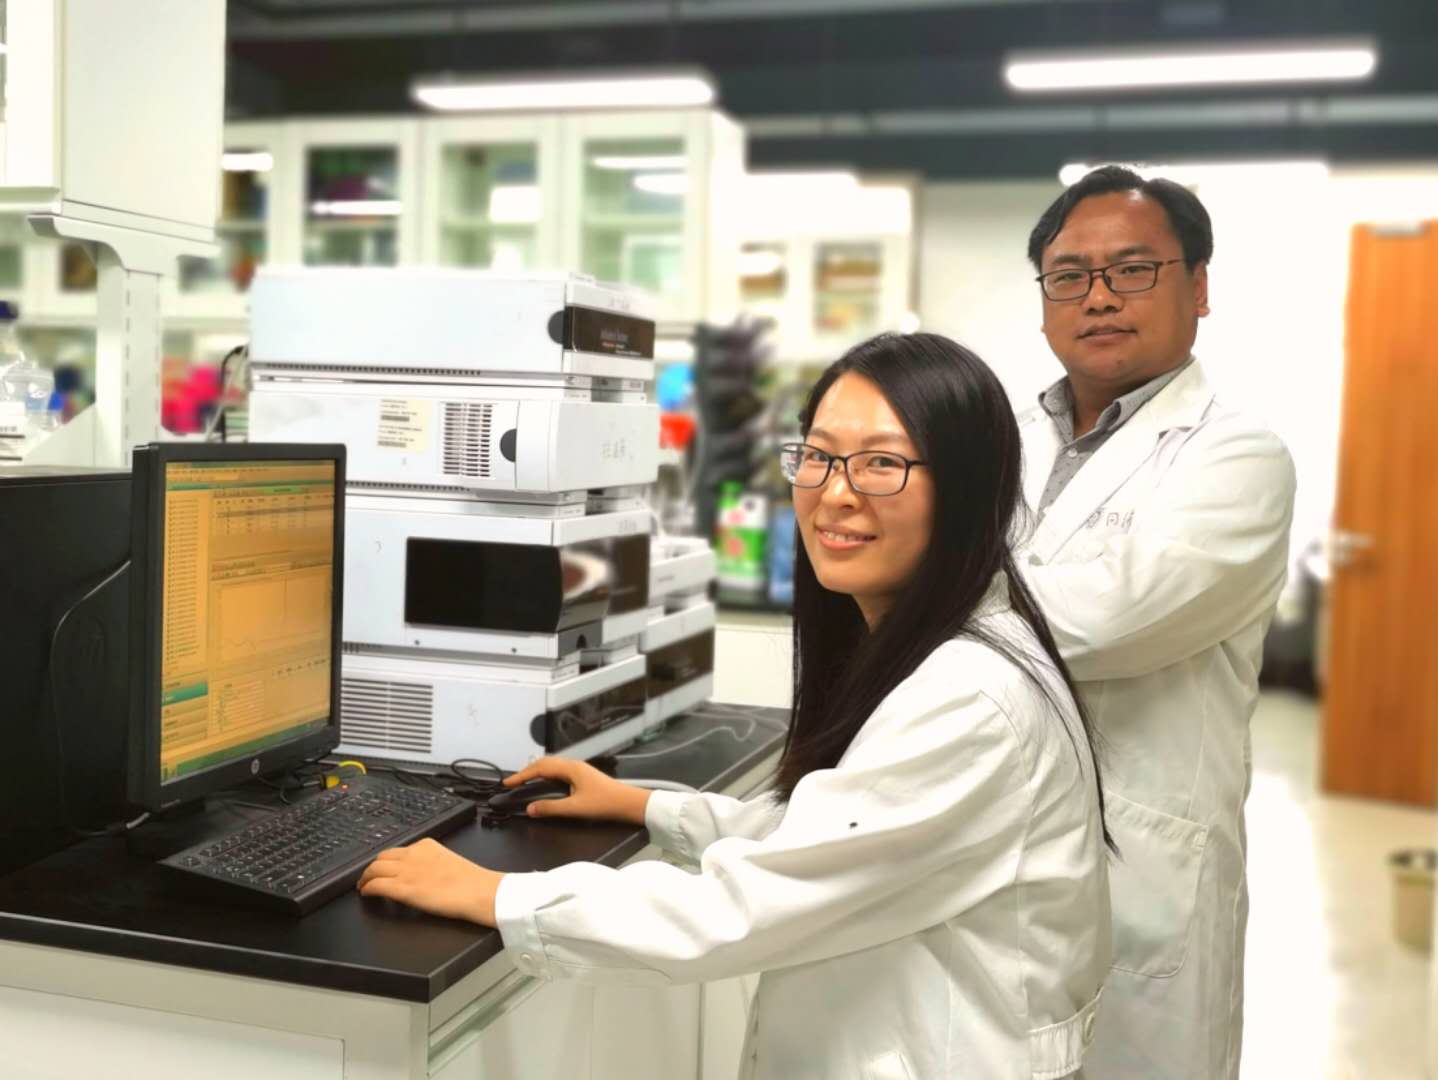 Ying-Ying Jiang (front) and Prof. Chen collecting data at Tongji University in China.